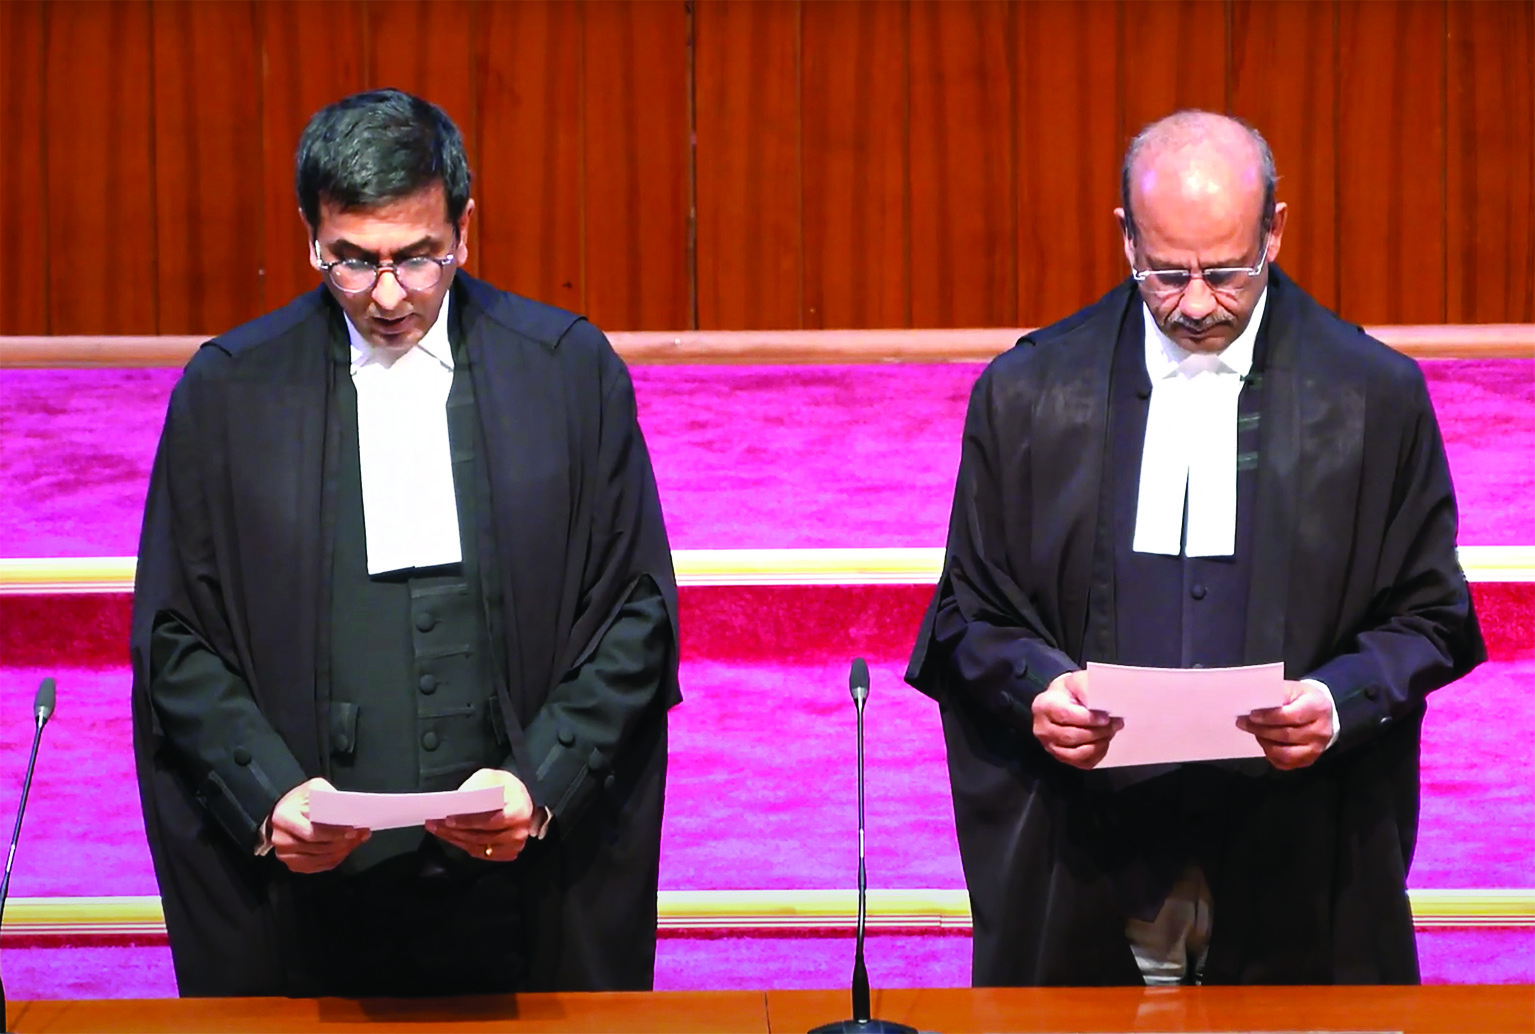 Two Supreme Court judges sworn in